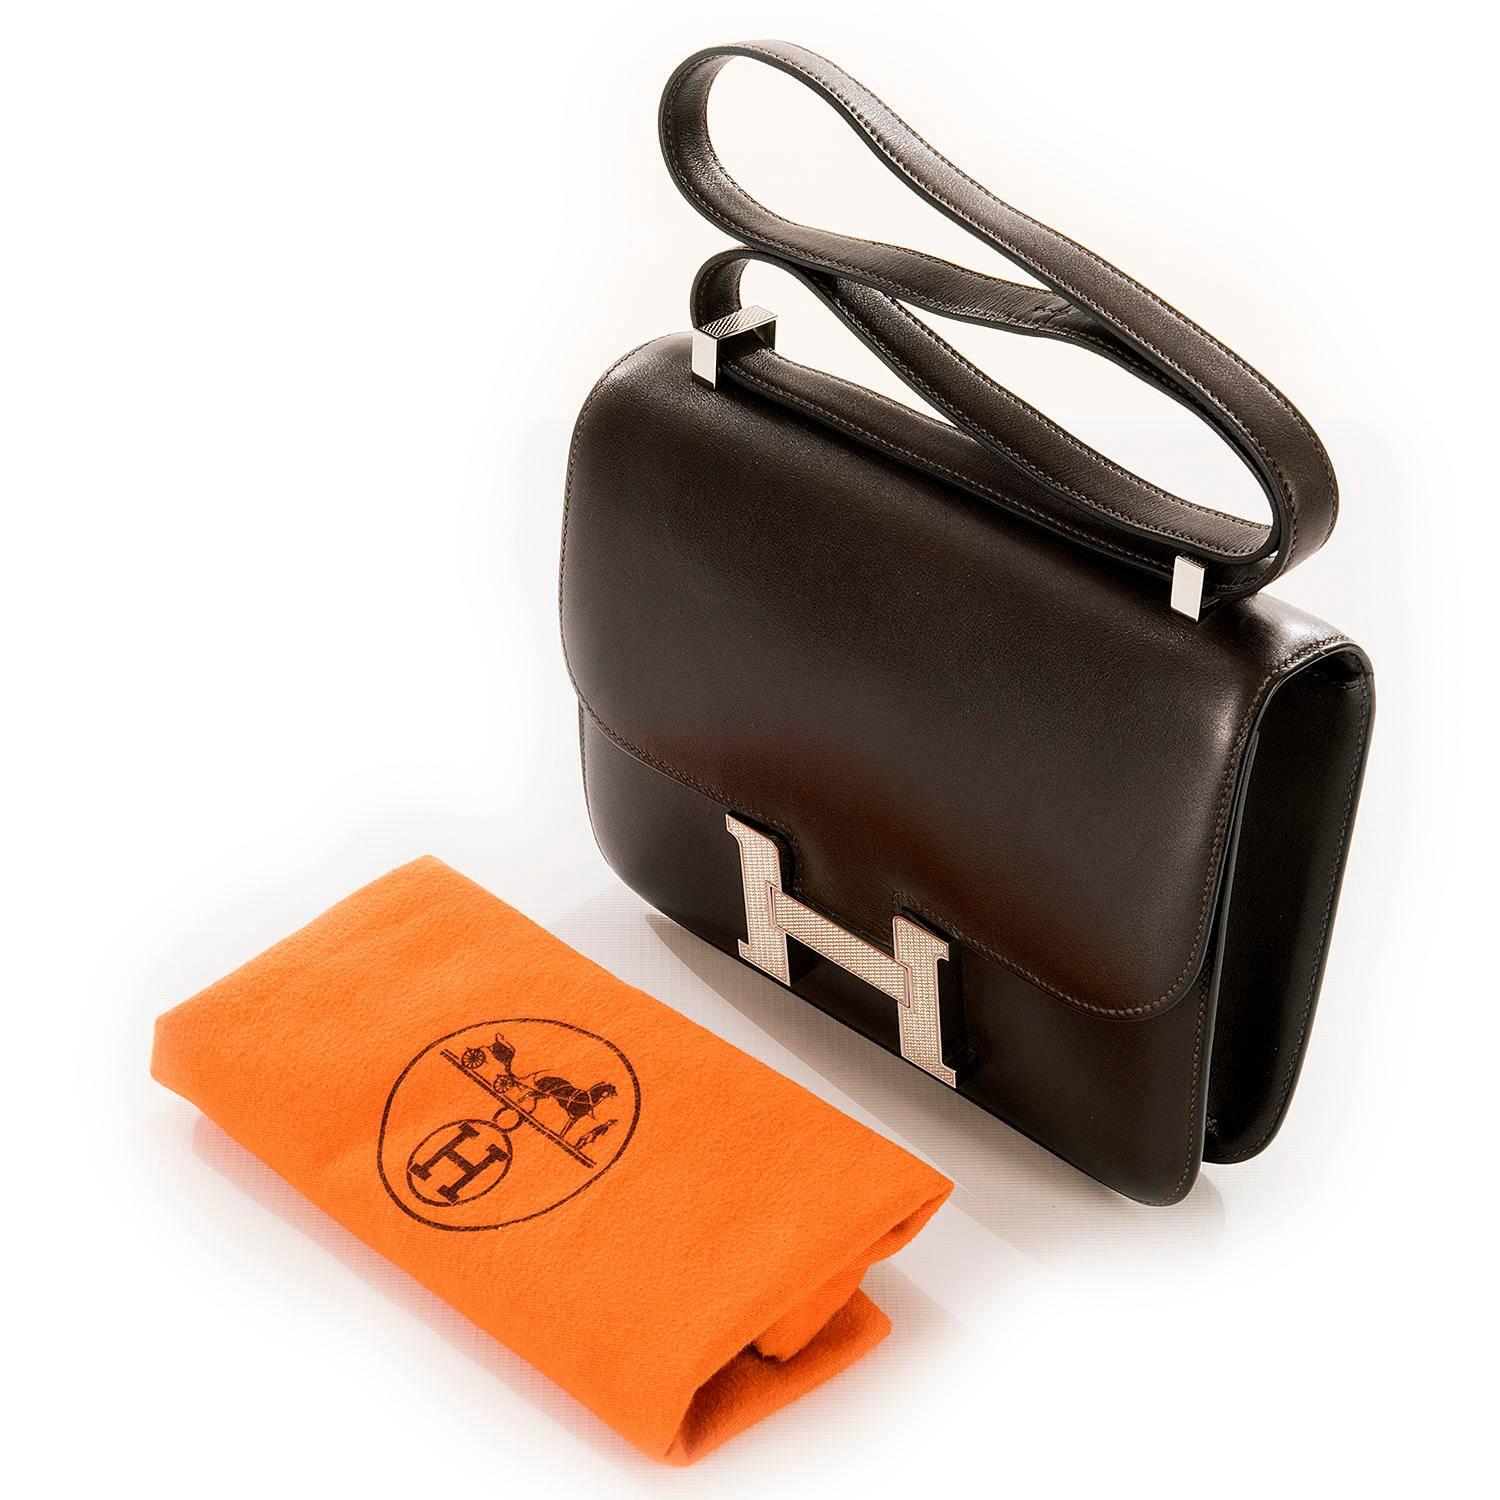  Tres Chic Limited Edition Hermes 23cm Ebene Box Leather Constance Shoulder Bag For Sale 3